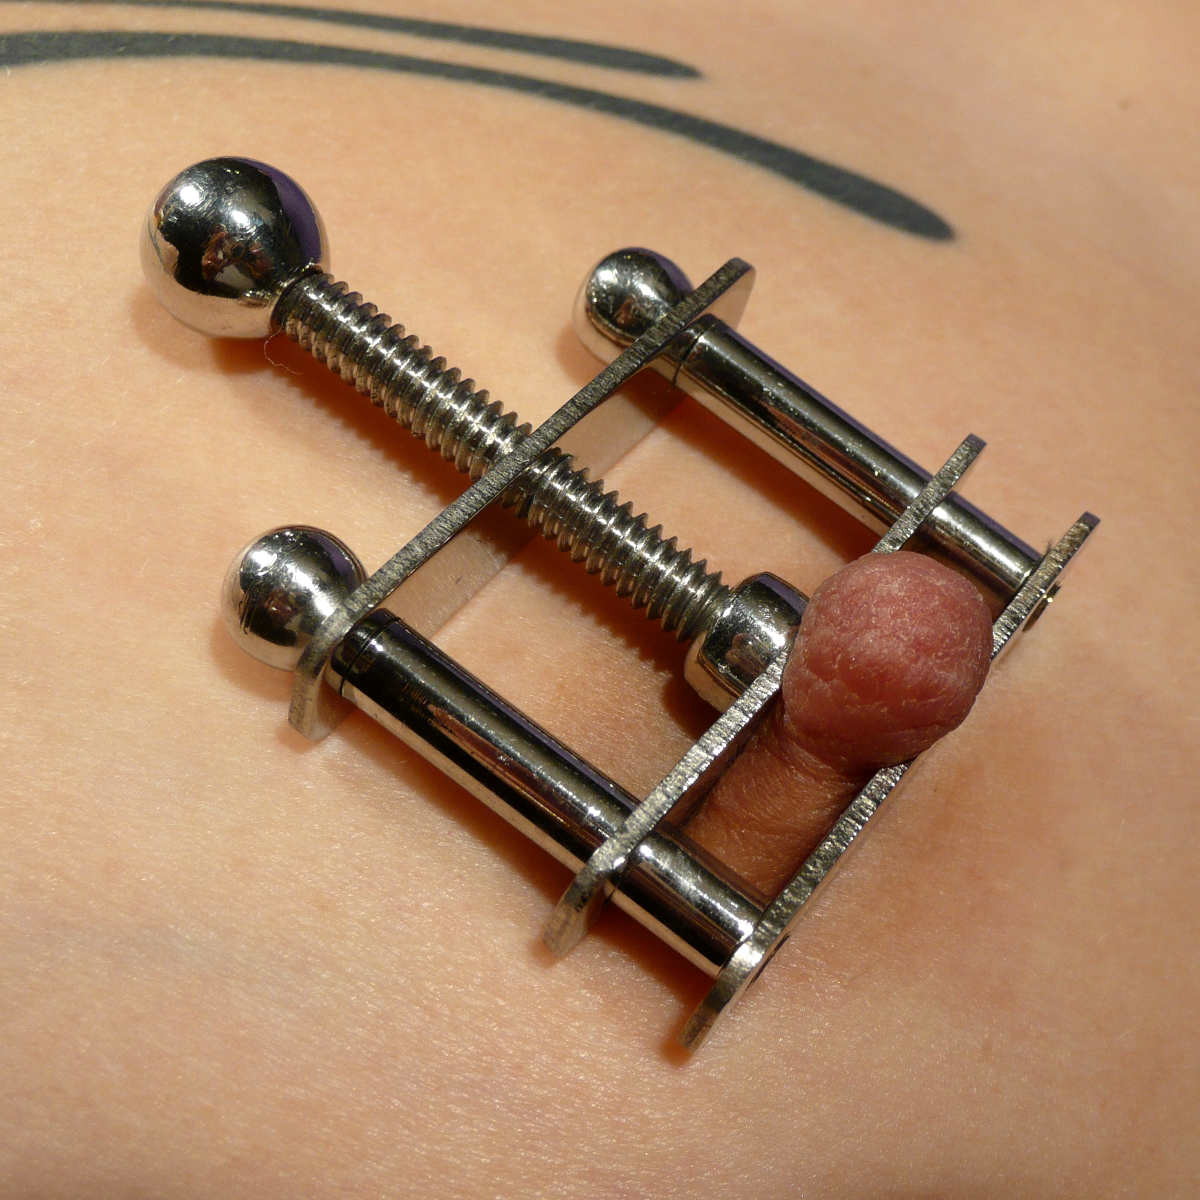 Screw nipple clamps